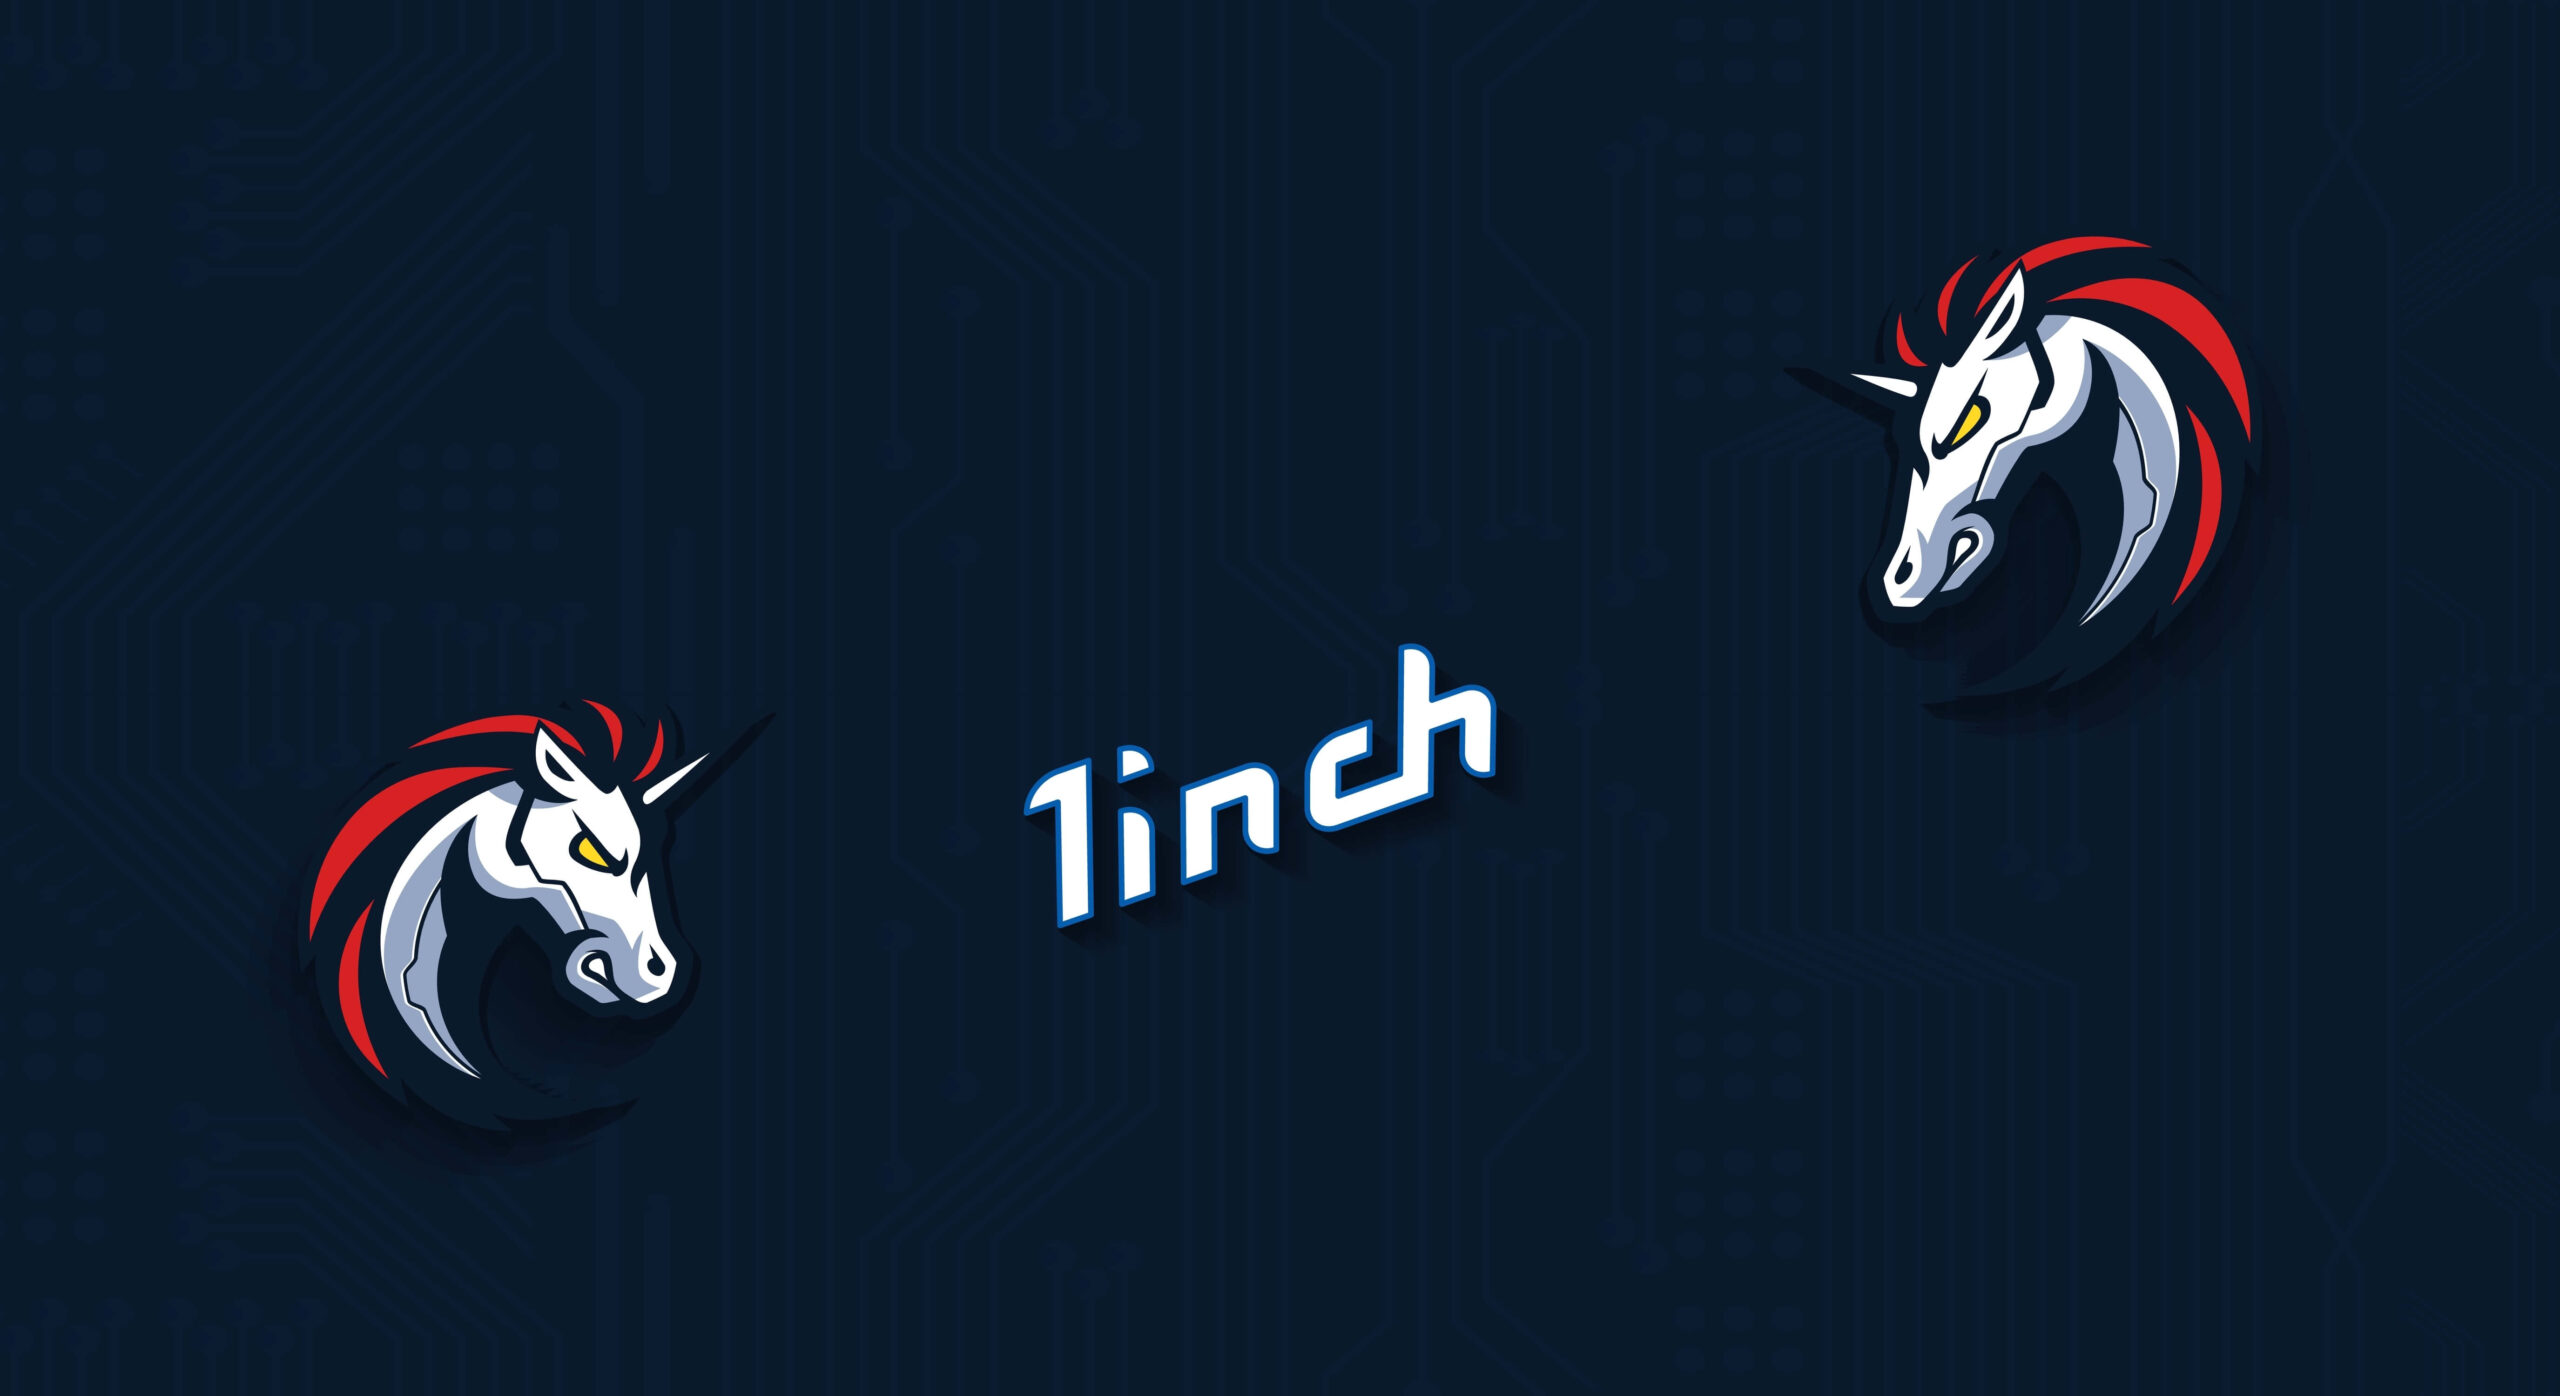 1inch (1INCH) crypto token logo on dark background